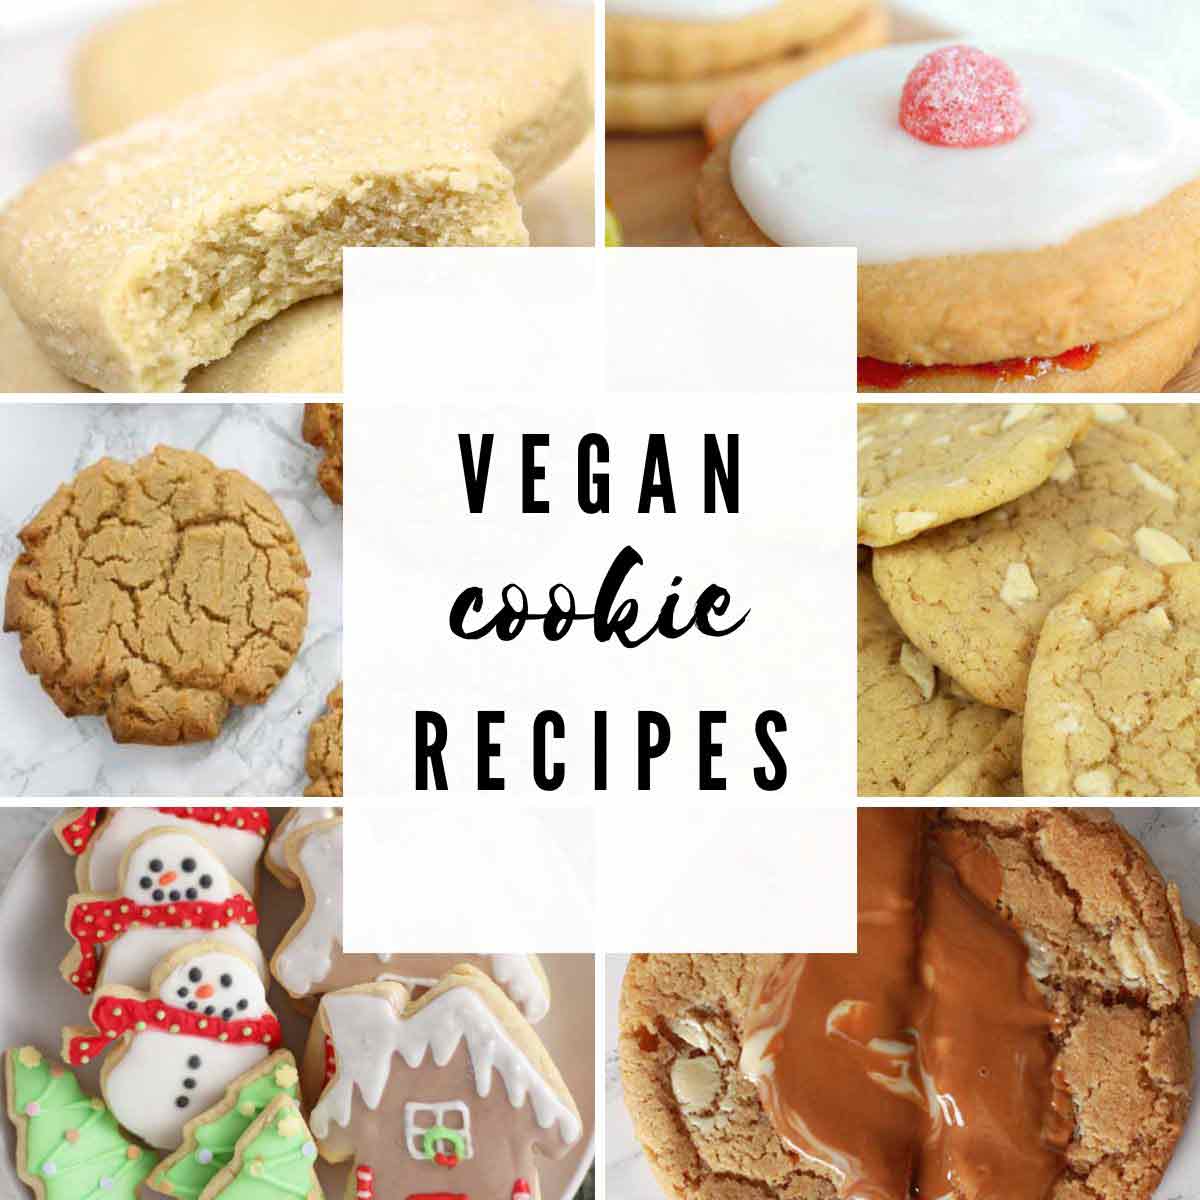 6 images of various vegan Cookie Recipes